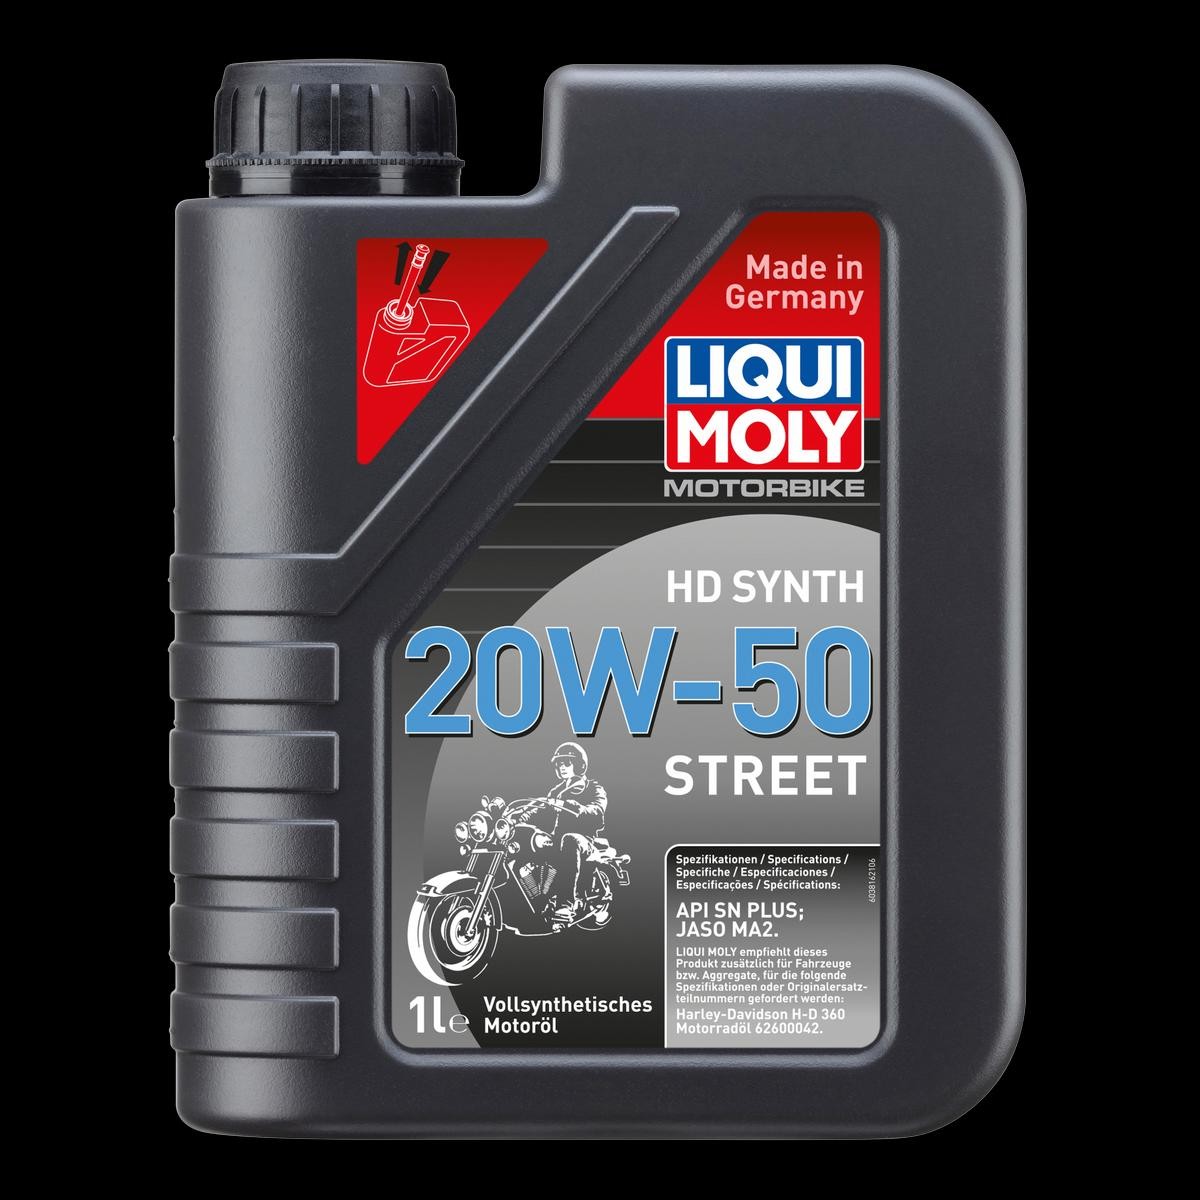 Motorrad LIQUI MOLY Motorbike, HD Synth Street 20W-50, 1l Motoröl 3816 günstig kaufen